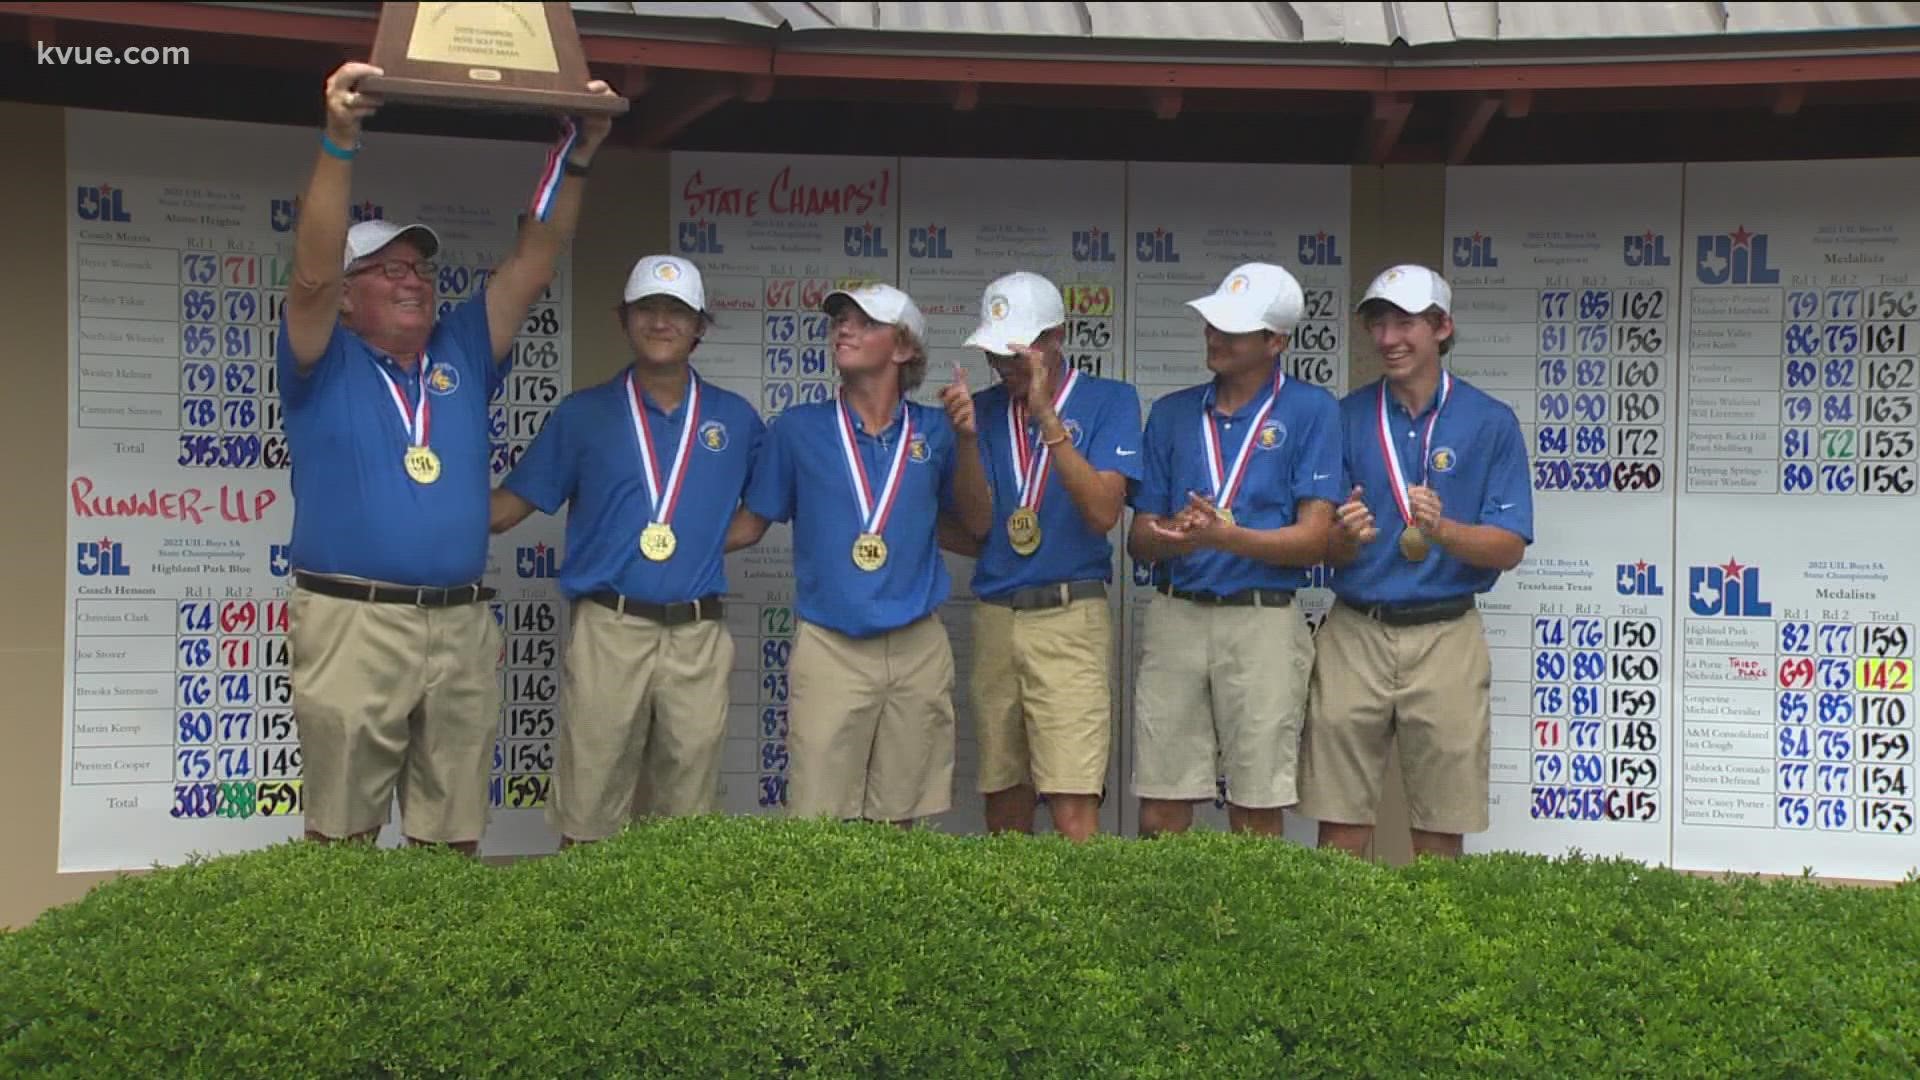 Congrats to the boys golf teams at both Westlake and Anderson high schools!